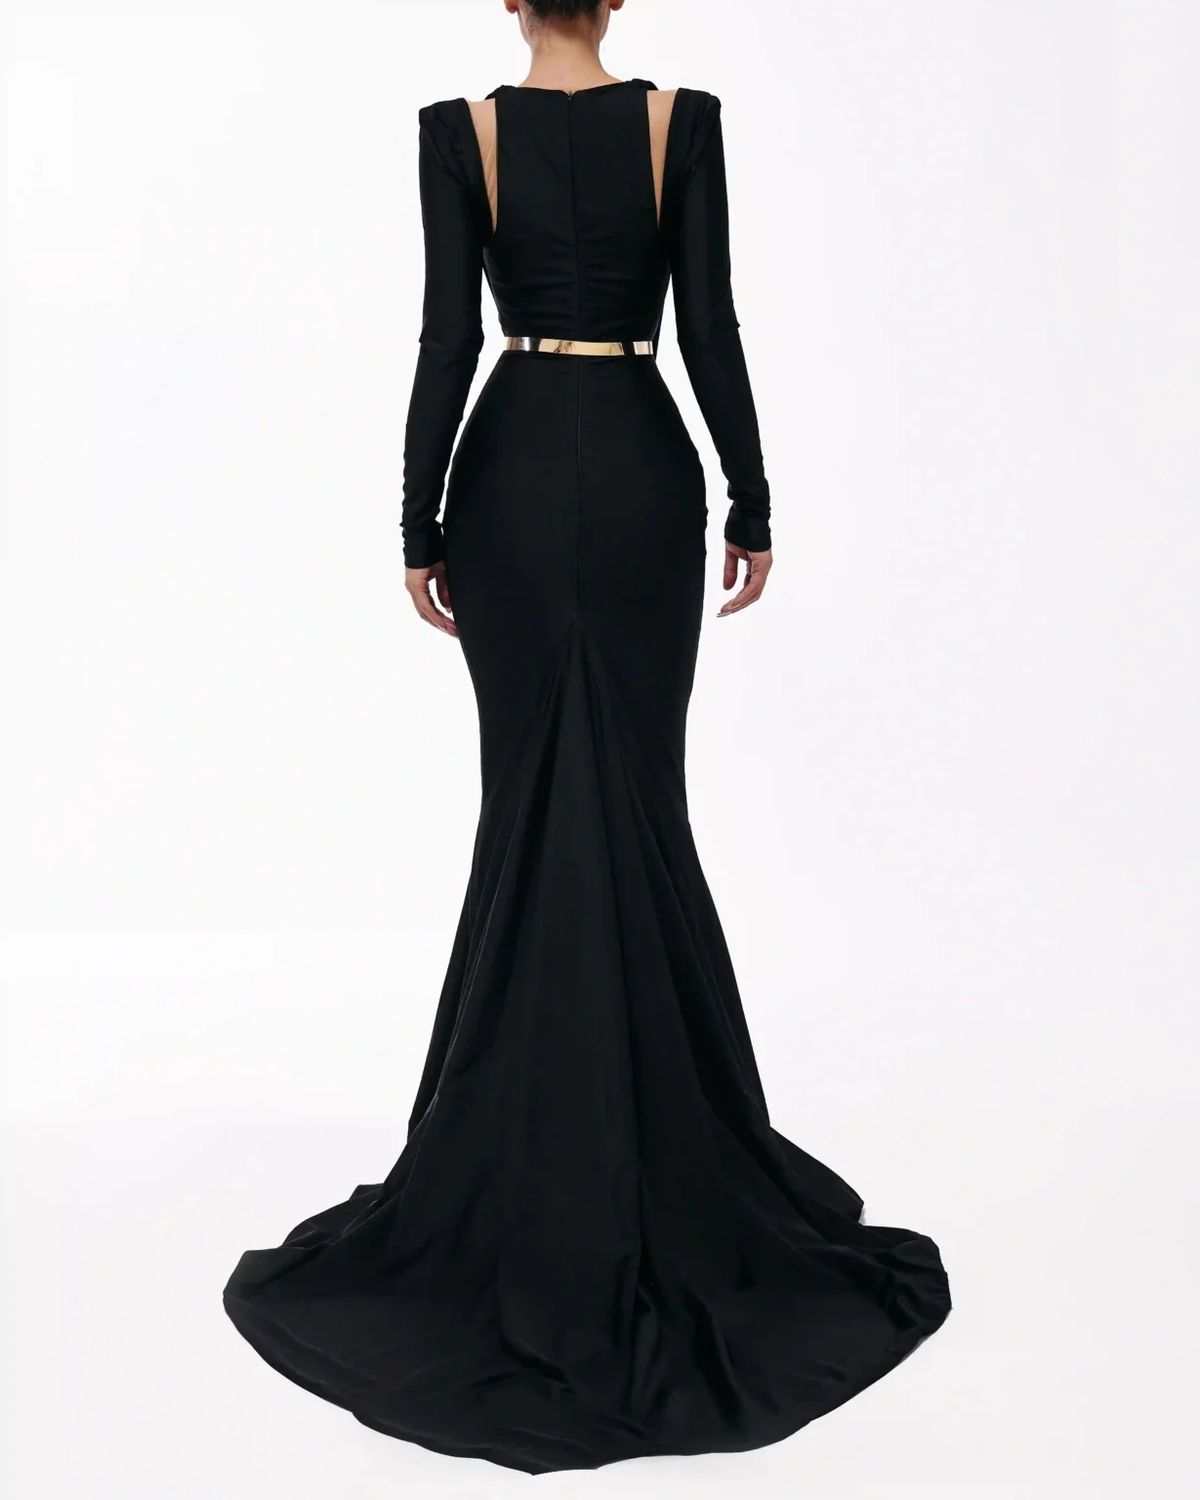 Style euphoria-24-2 Valdrin Sahiti Size XS Pageant Black Mermaid Dress on Queenly